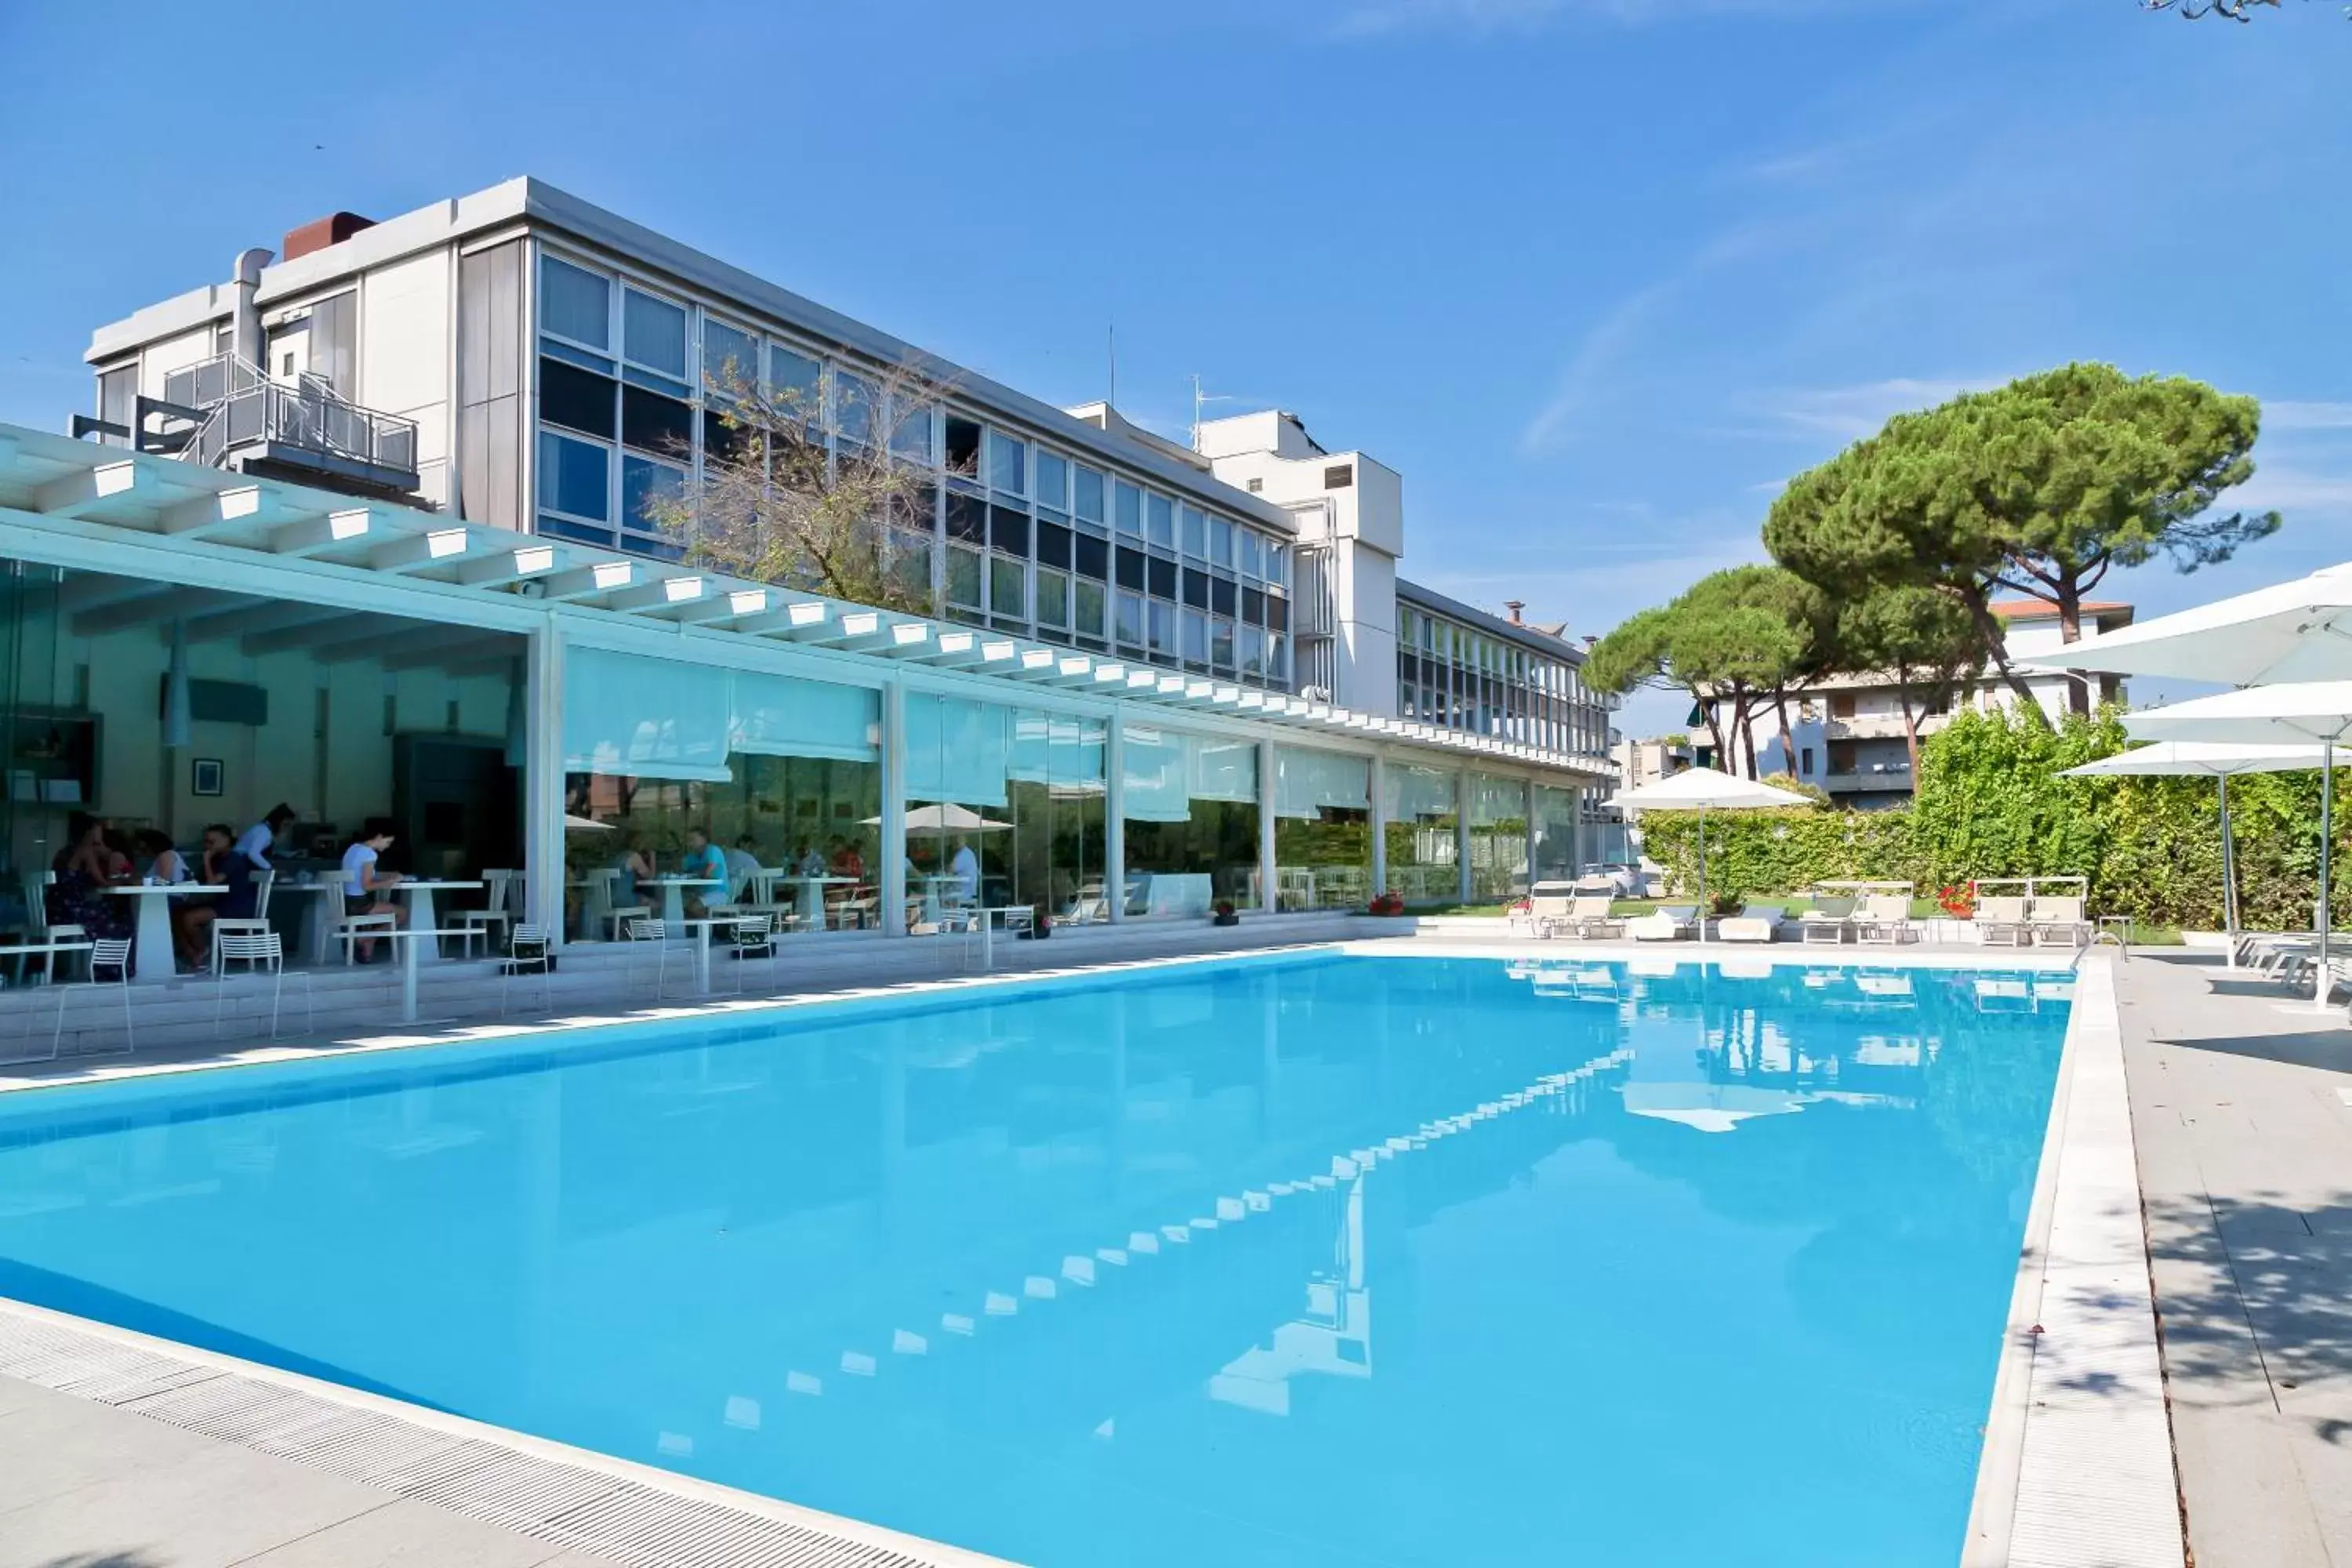 Swimming Pool in Italiana Hotels Florence